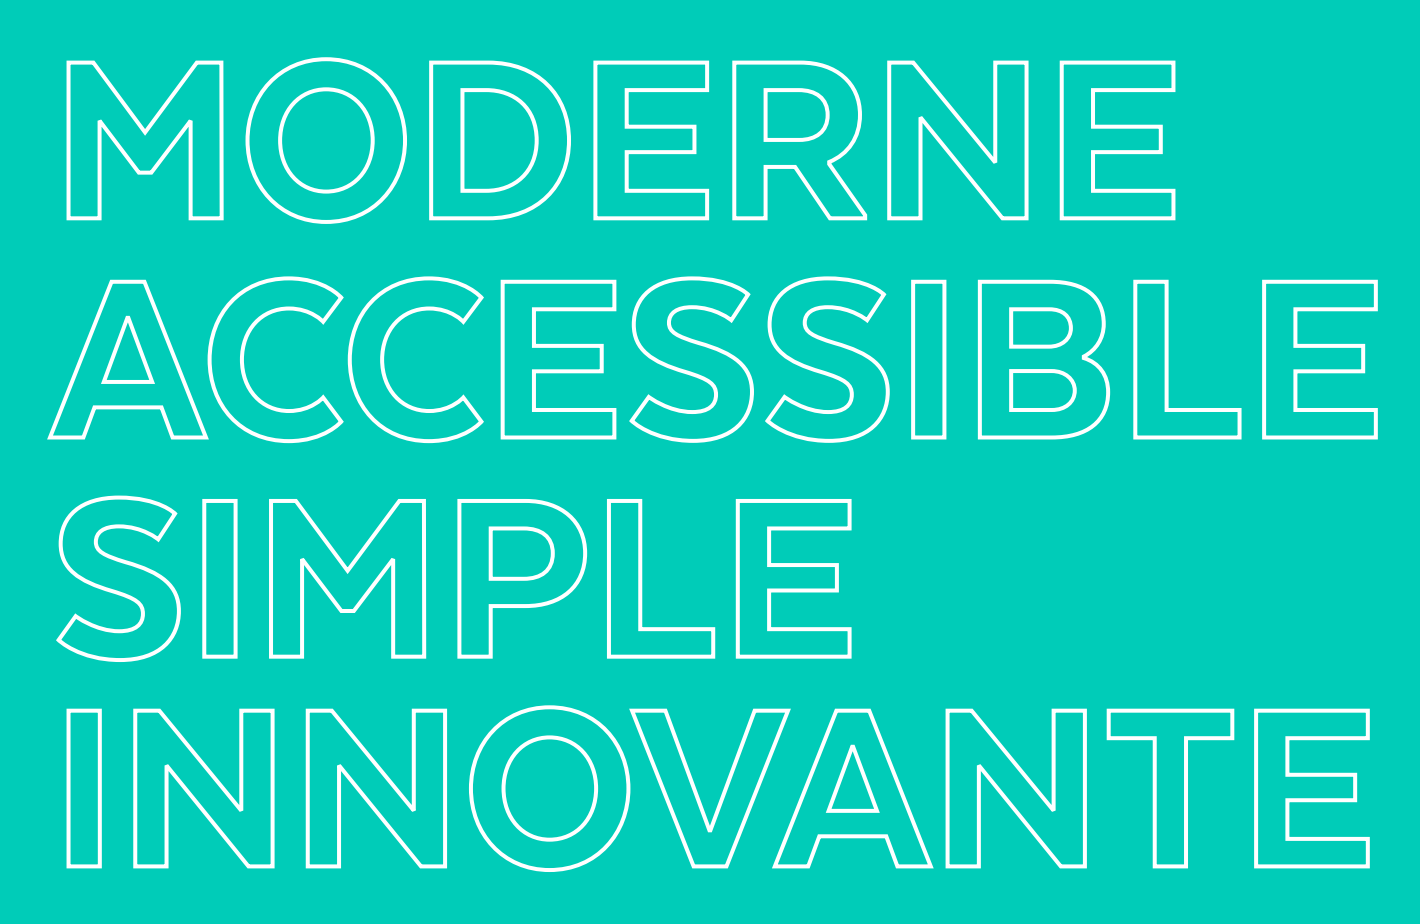 Moderne, accessible, simple et innovante